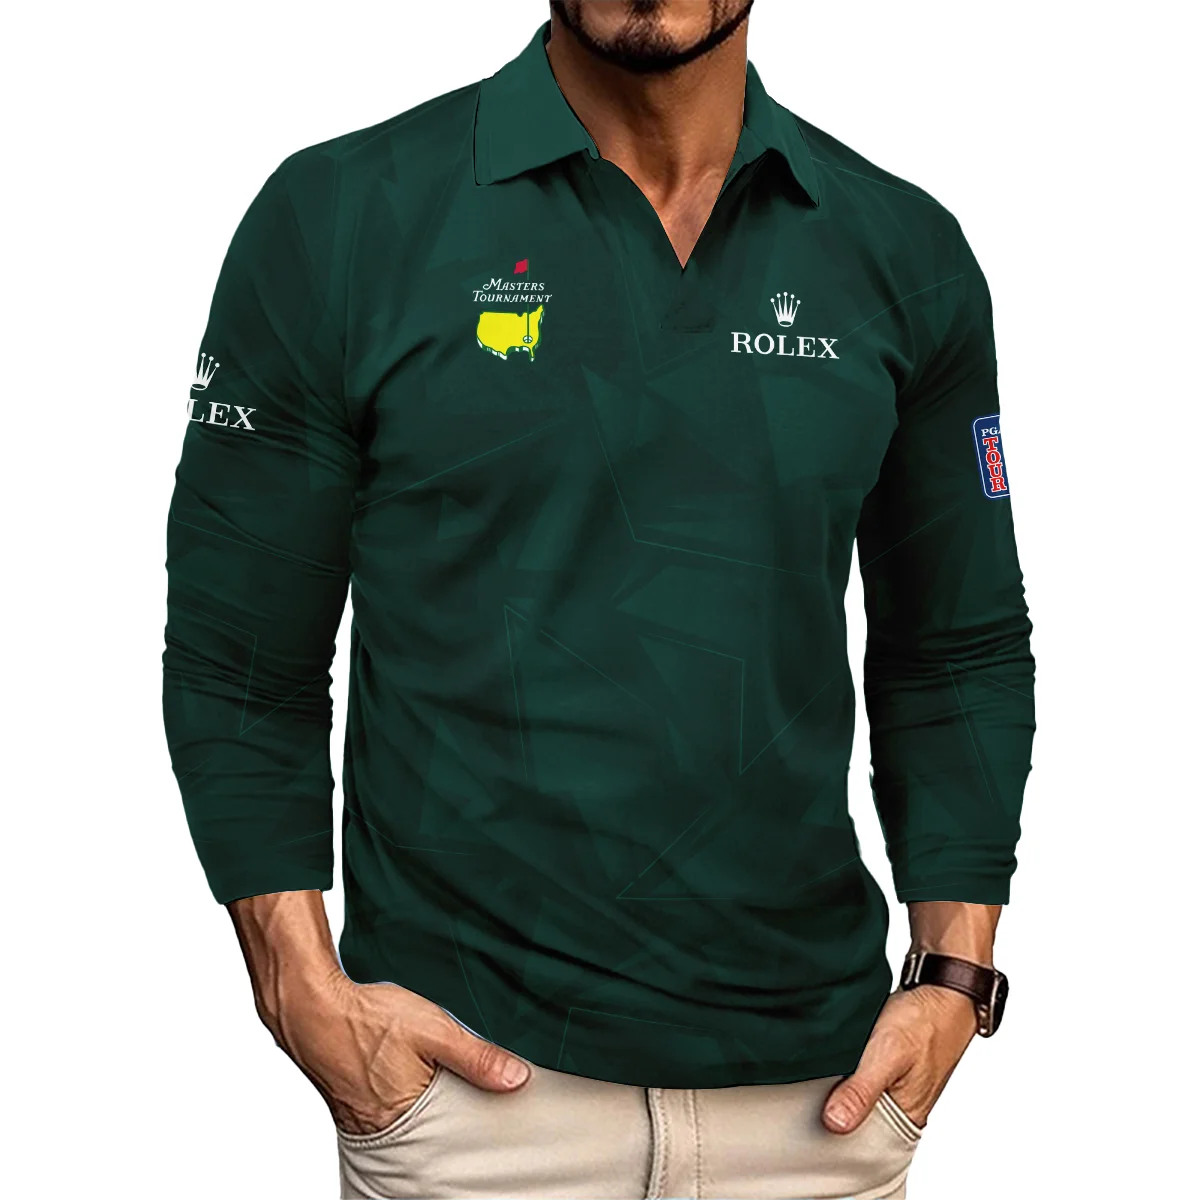 Dark Green Abstract Sport Masters Tournament Rolex Unisex Sweatshirt Style Classic Sweatshirt